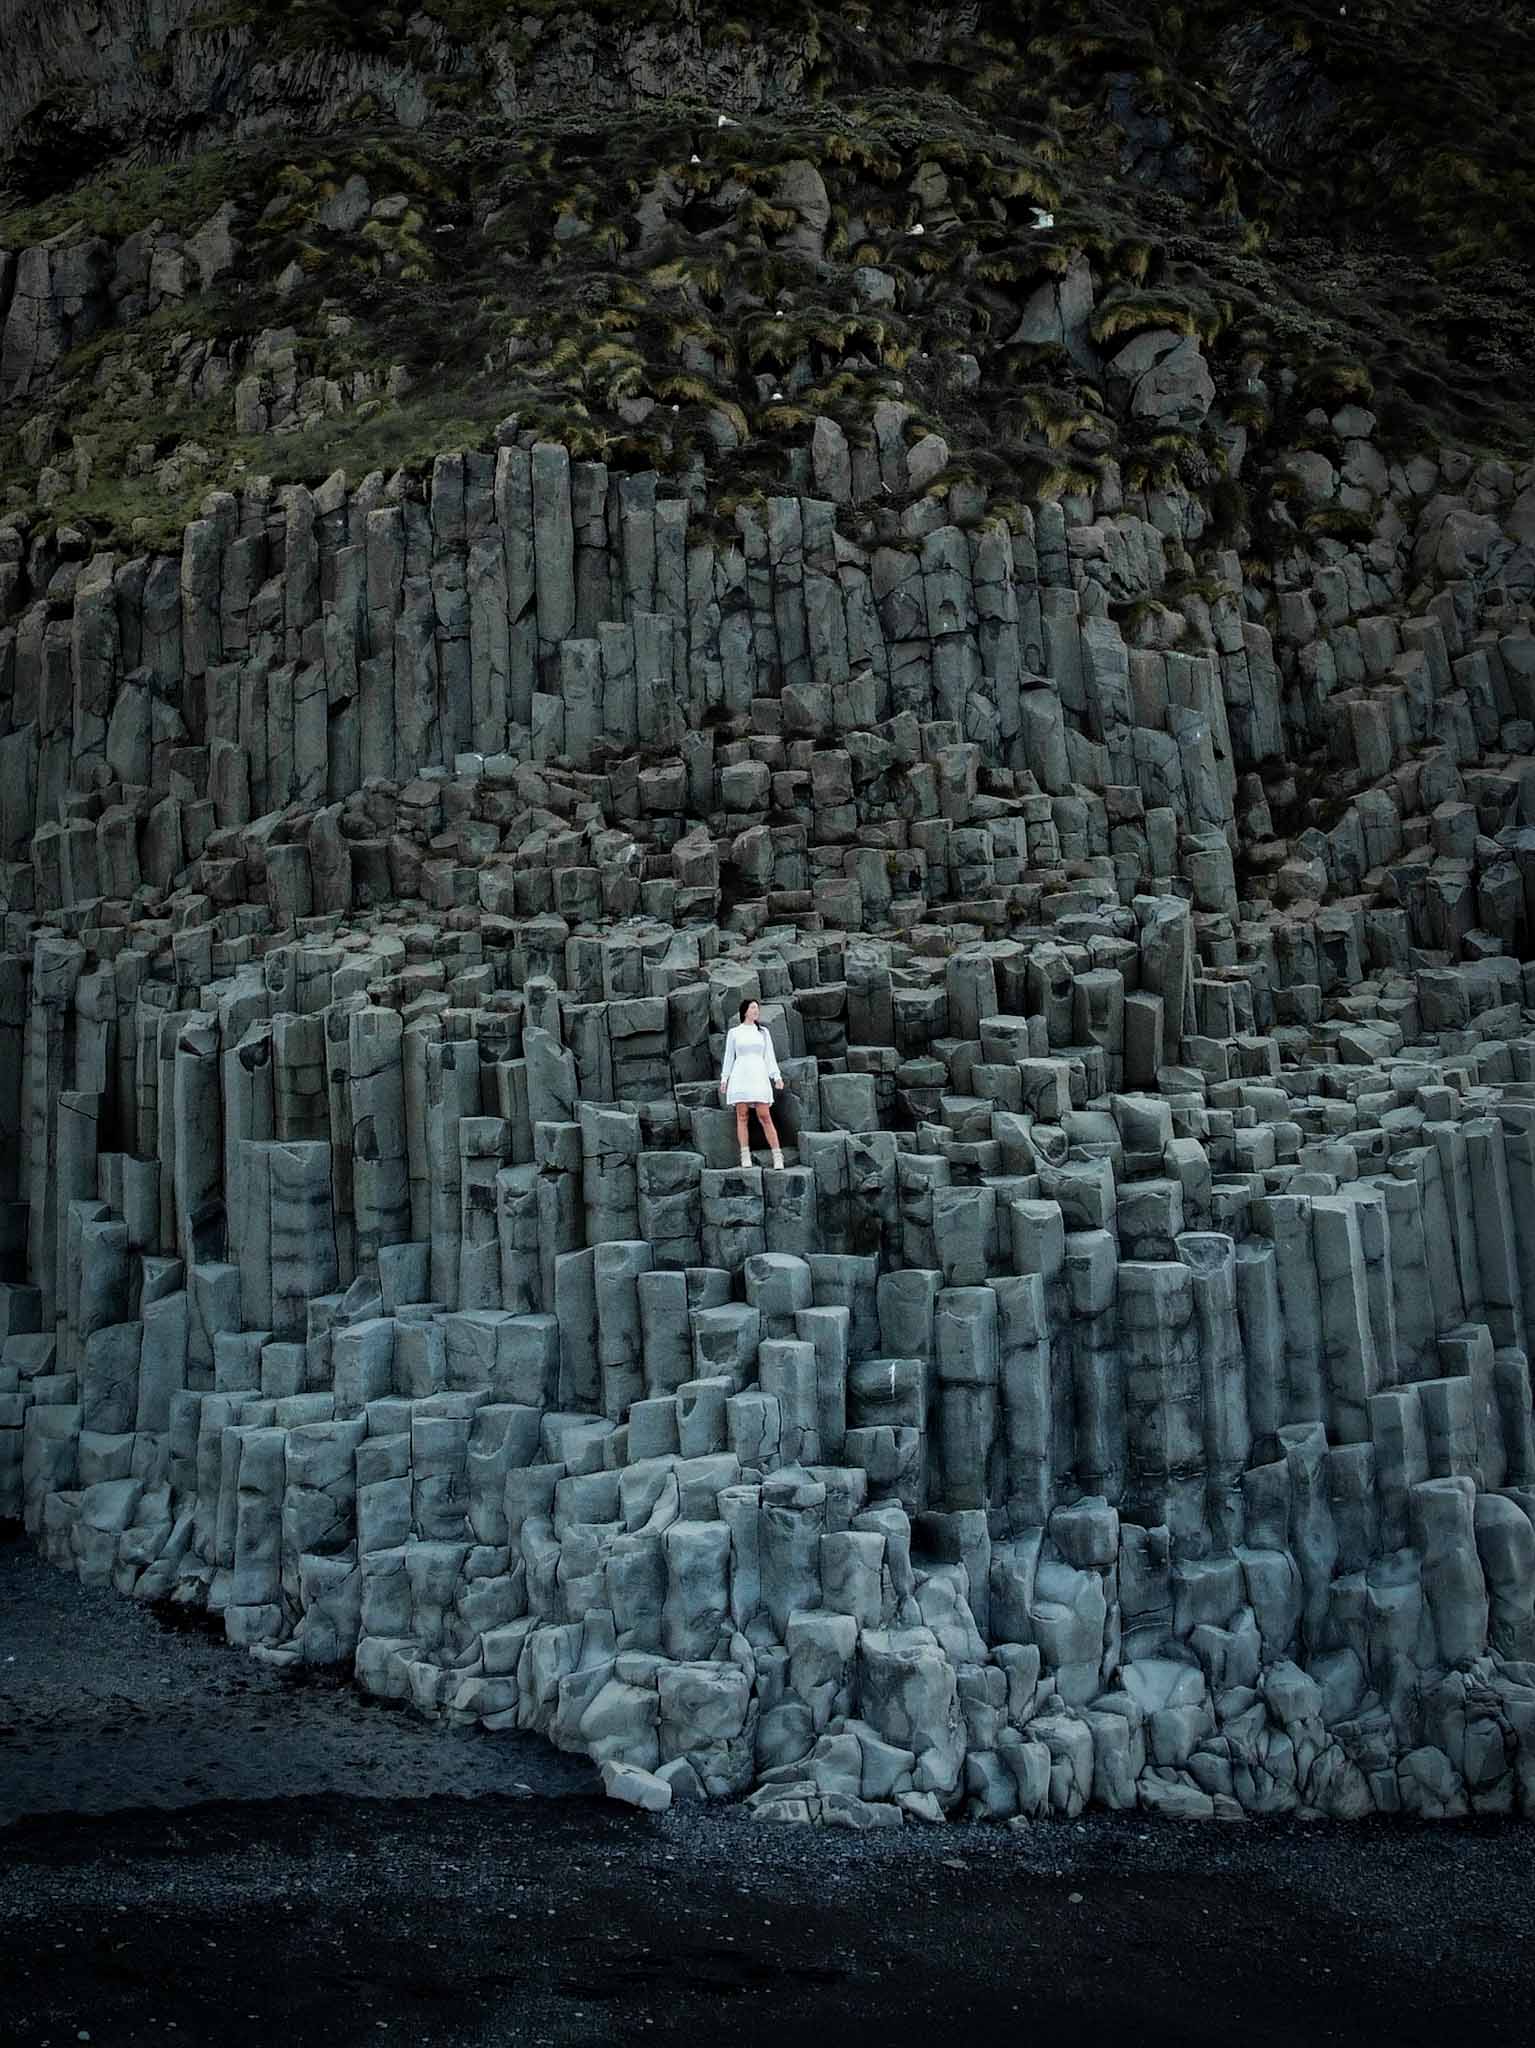 Basalt columns in Iceland - Reynisfjara black beach